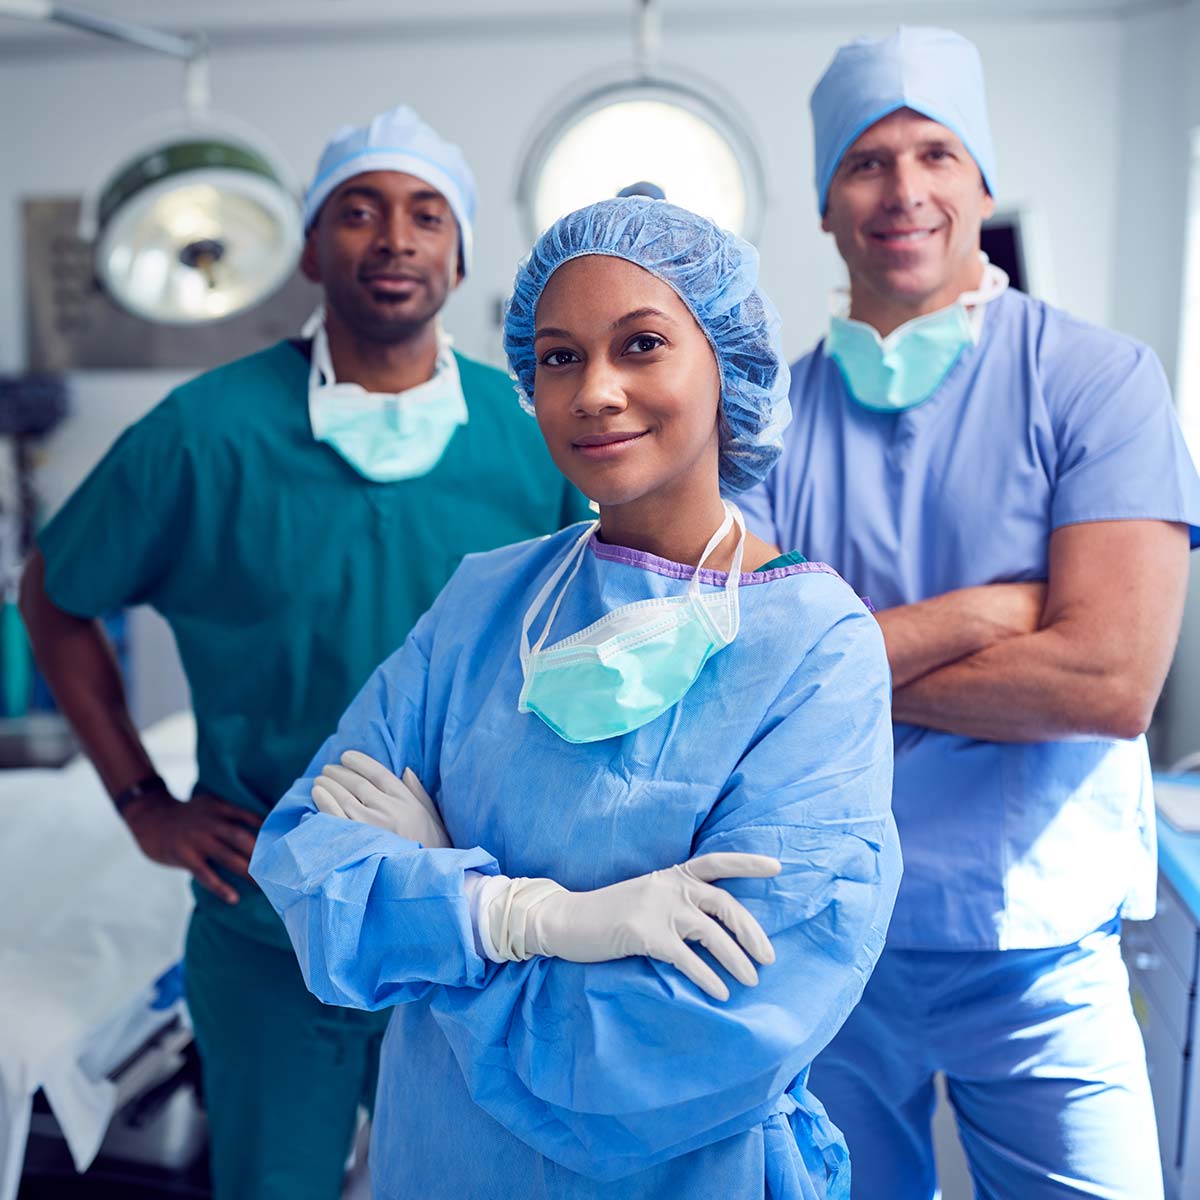 Surgical team posing